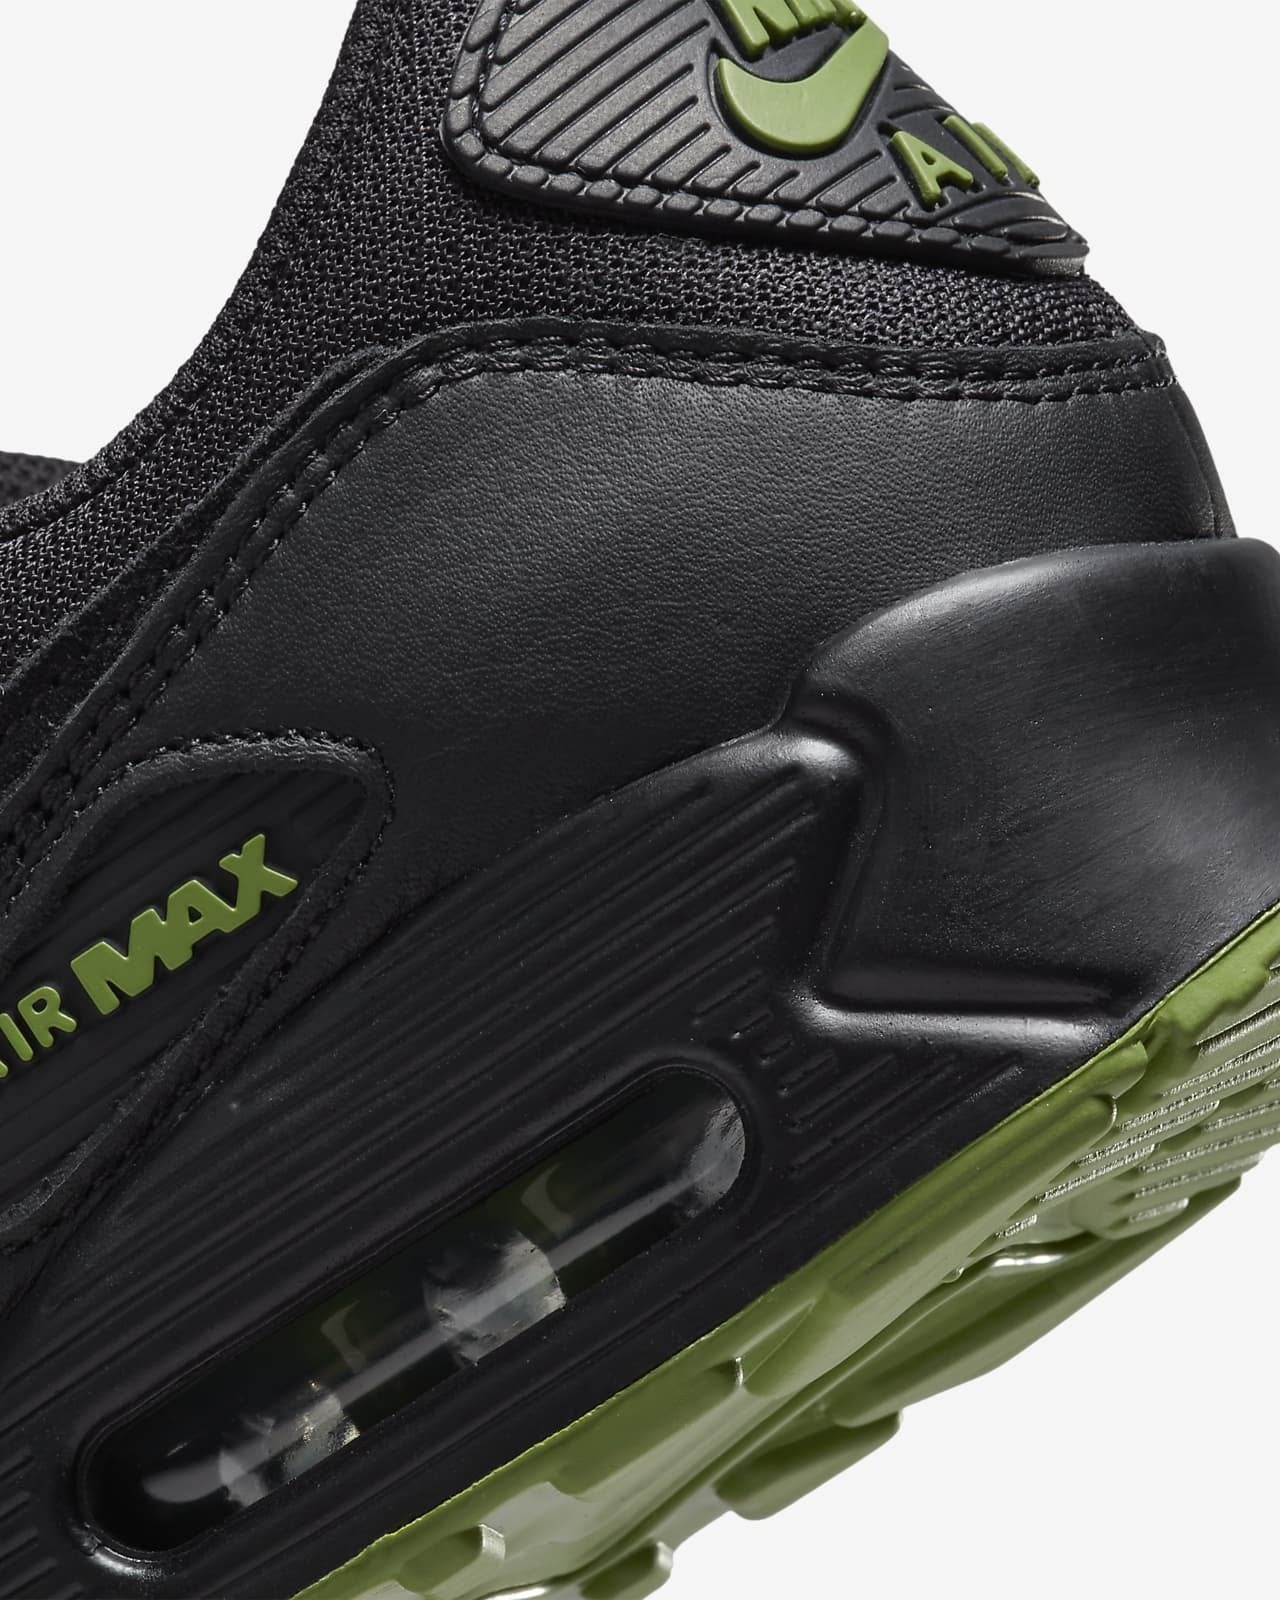 Nike Air Max 90 'Black Chlorophyll'